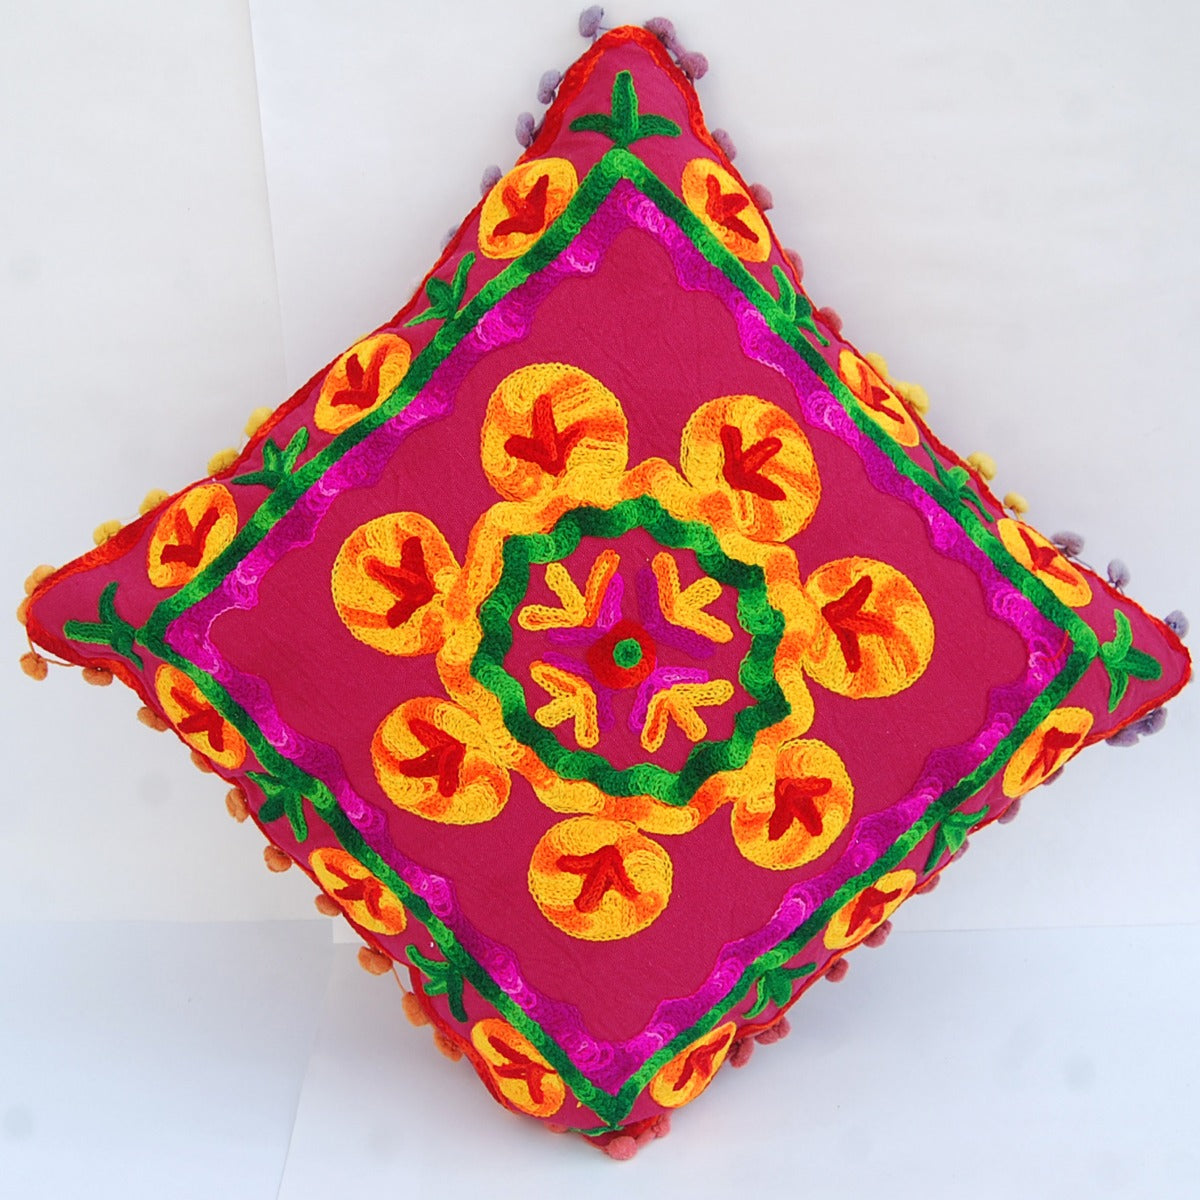 Indian Suzani Cushion Cover Vintage Pillows Decorative - CraftJaipur